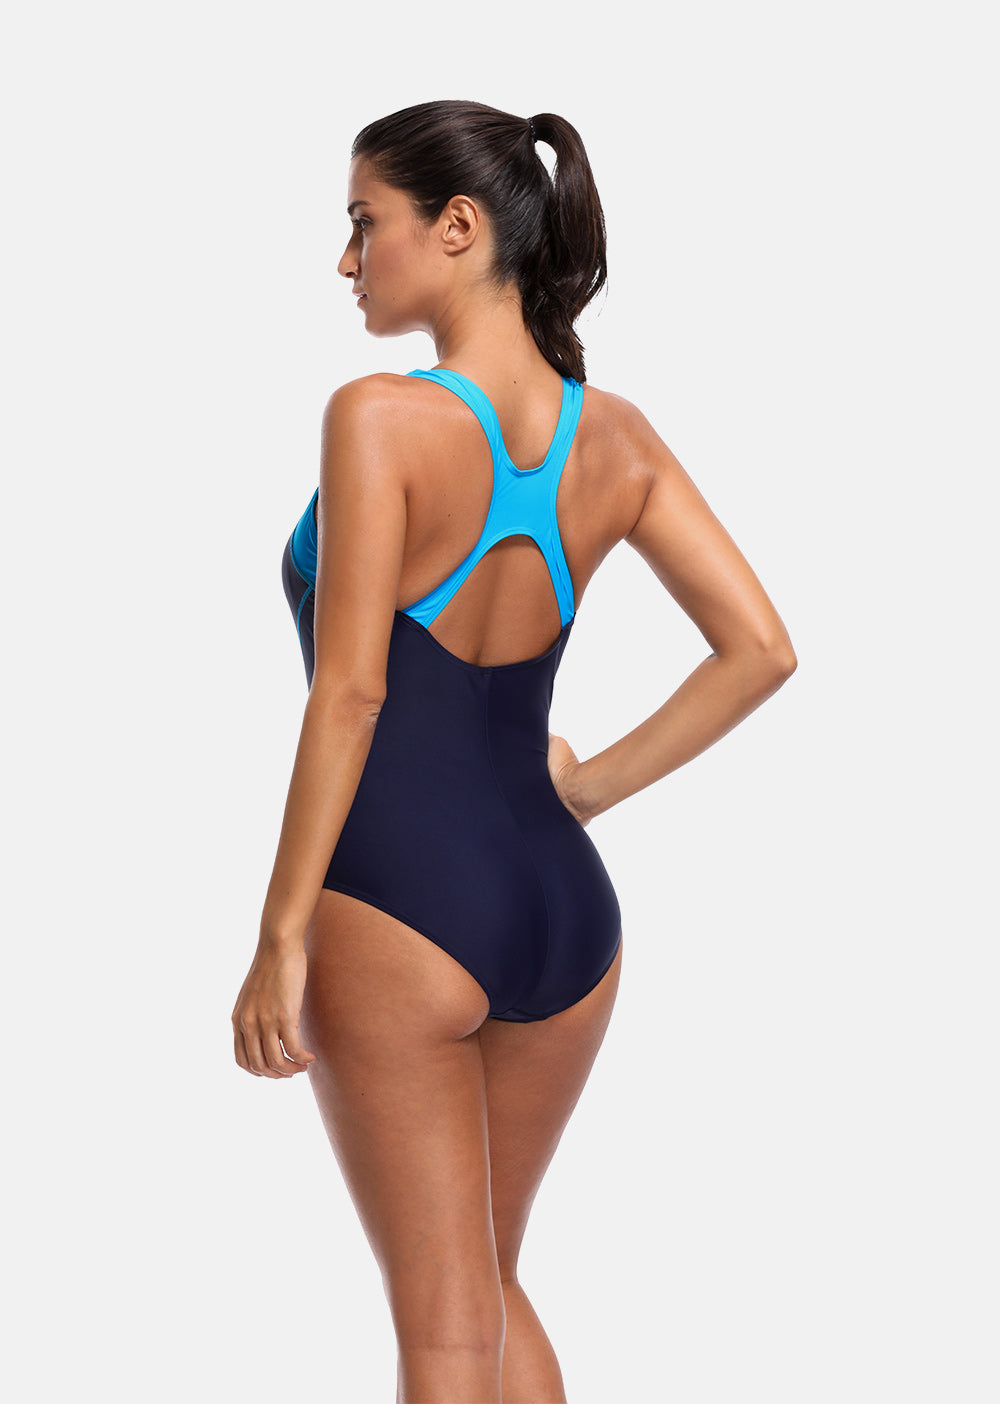 One Piece Pro Sports Swimwear Sports Swimsuit Colorblock Monokini Beach Wear Bathing Suit Bikini The Clothing Company Sydney